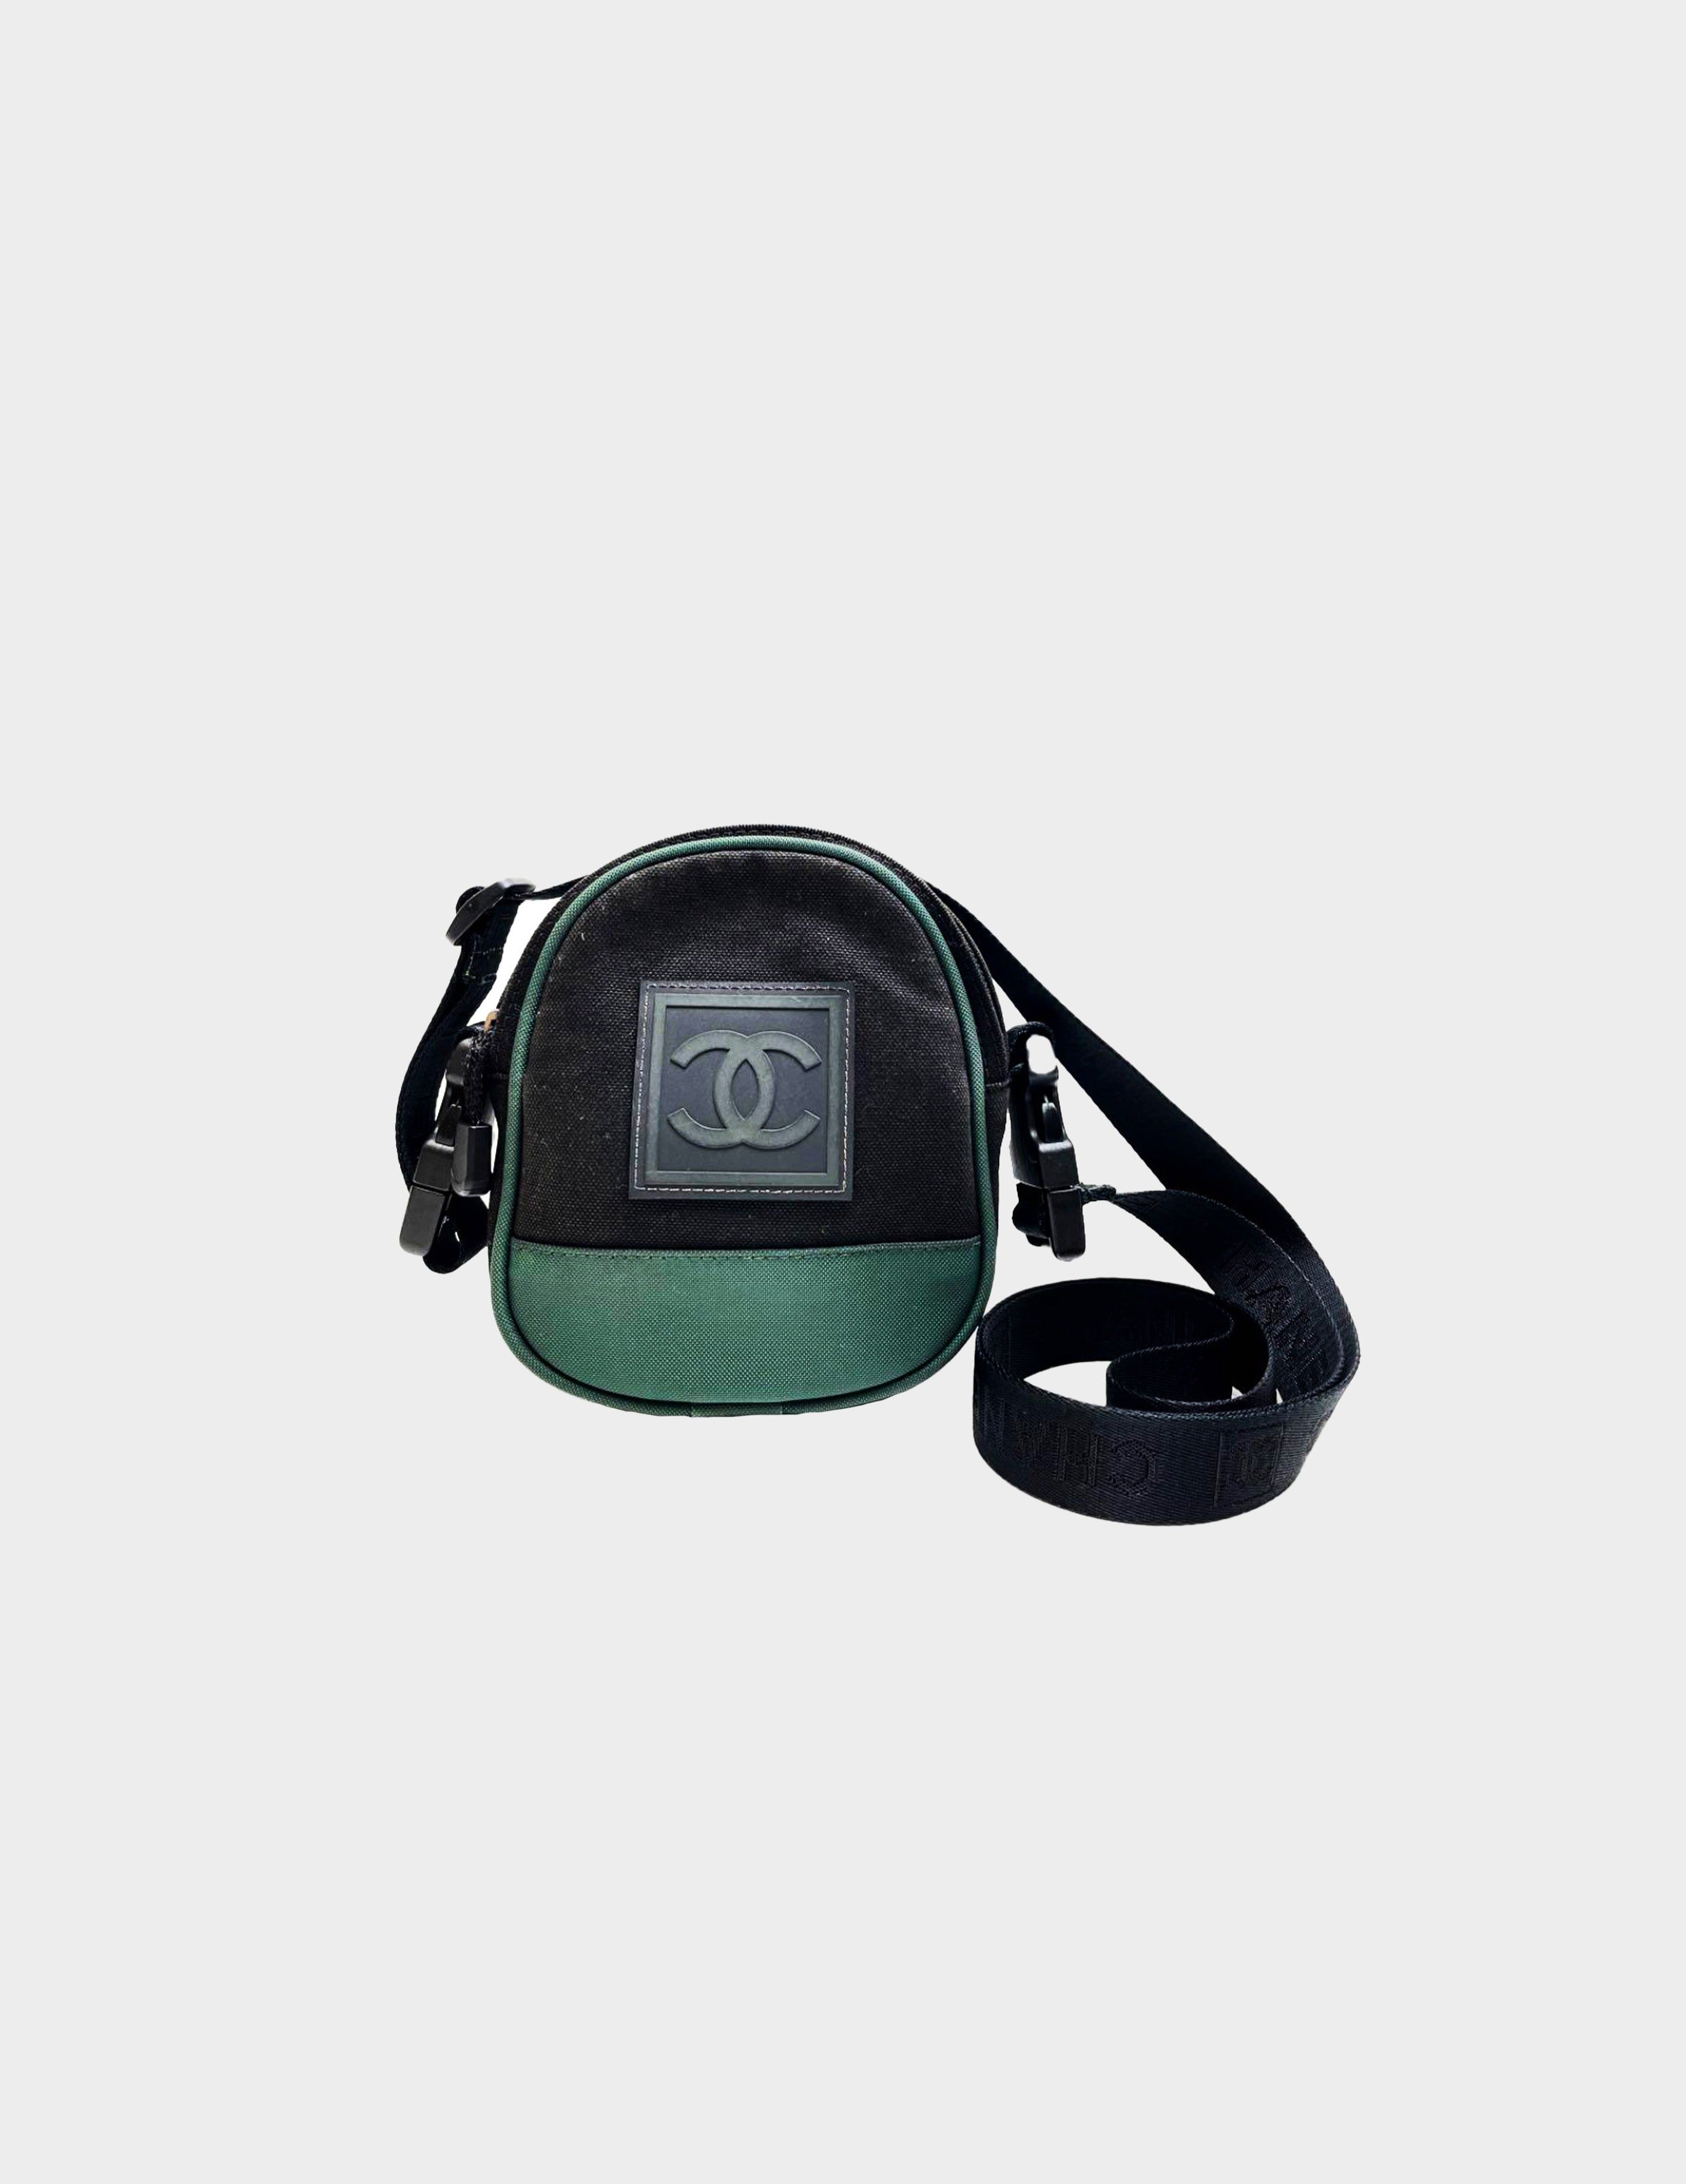 Chanel Sport Bag 